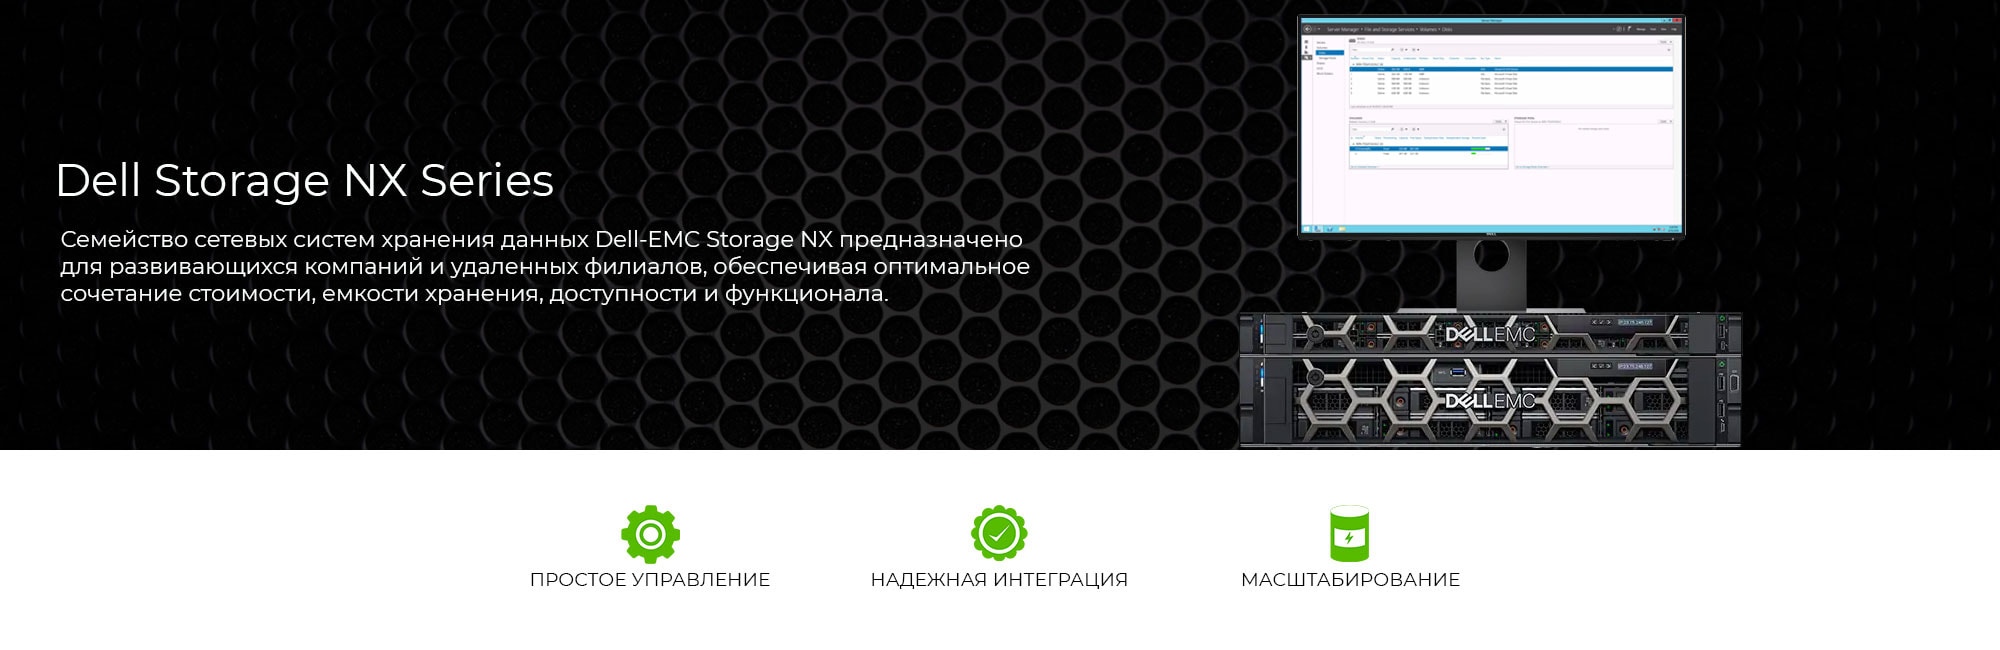 Dell-Storage-серии-NX-(NAS)